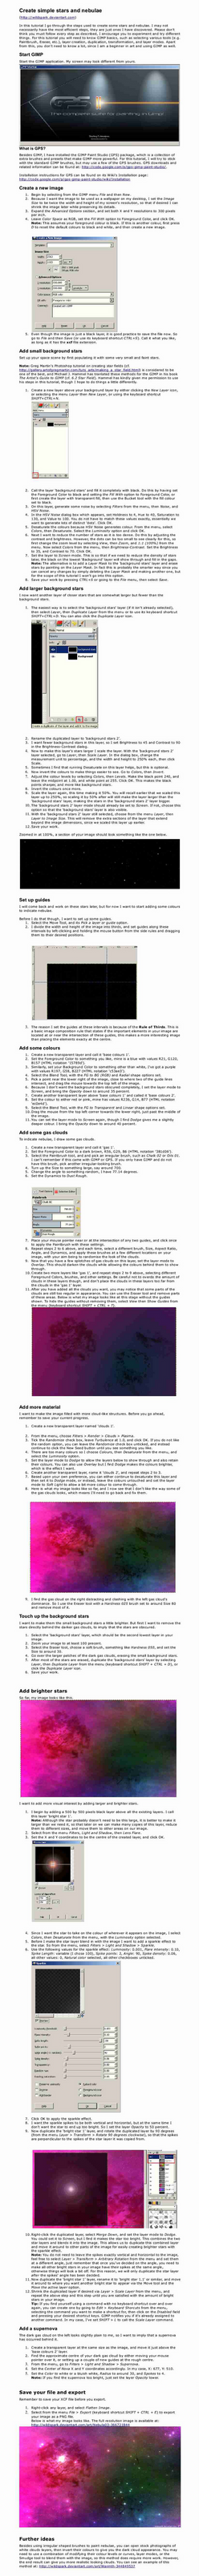 Tutorial: Create simple stars and nebulae in GIMP